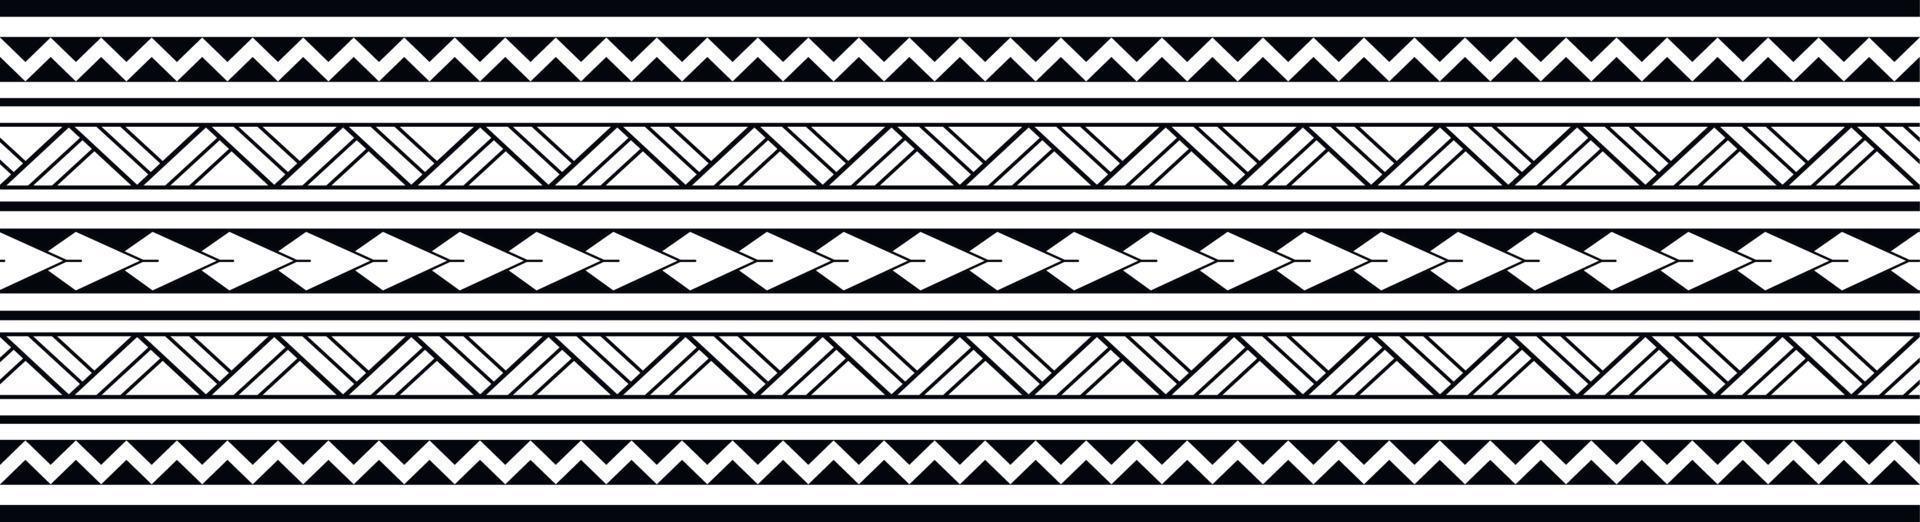 Maori Polynesian tattoo bracelet. Tribal sleeve seamless pattern vector. vector